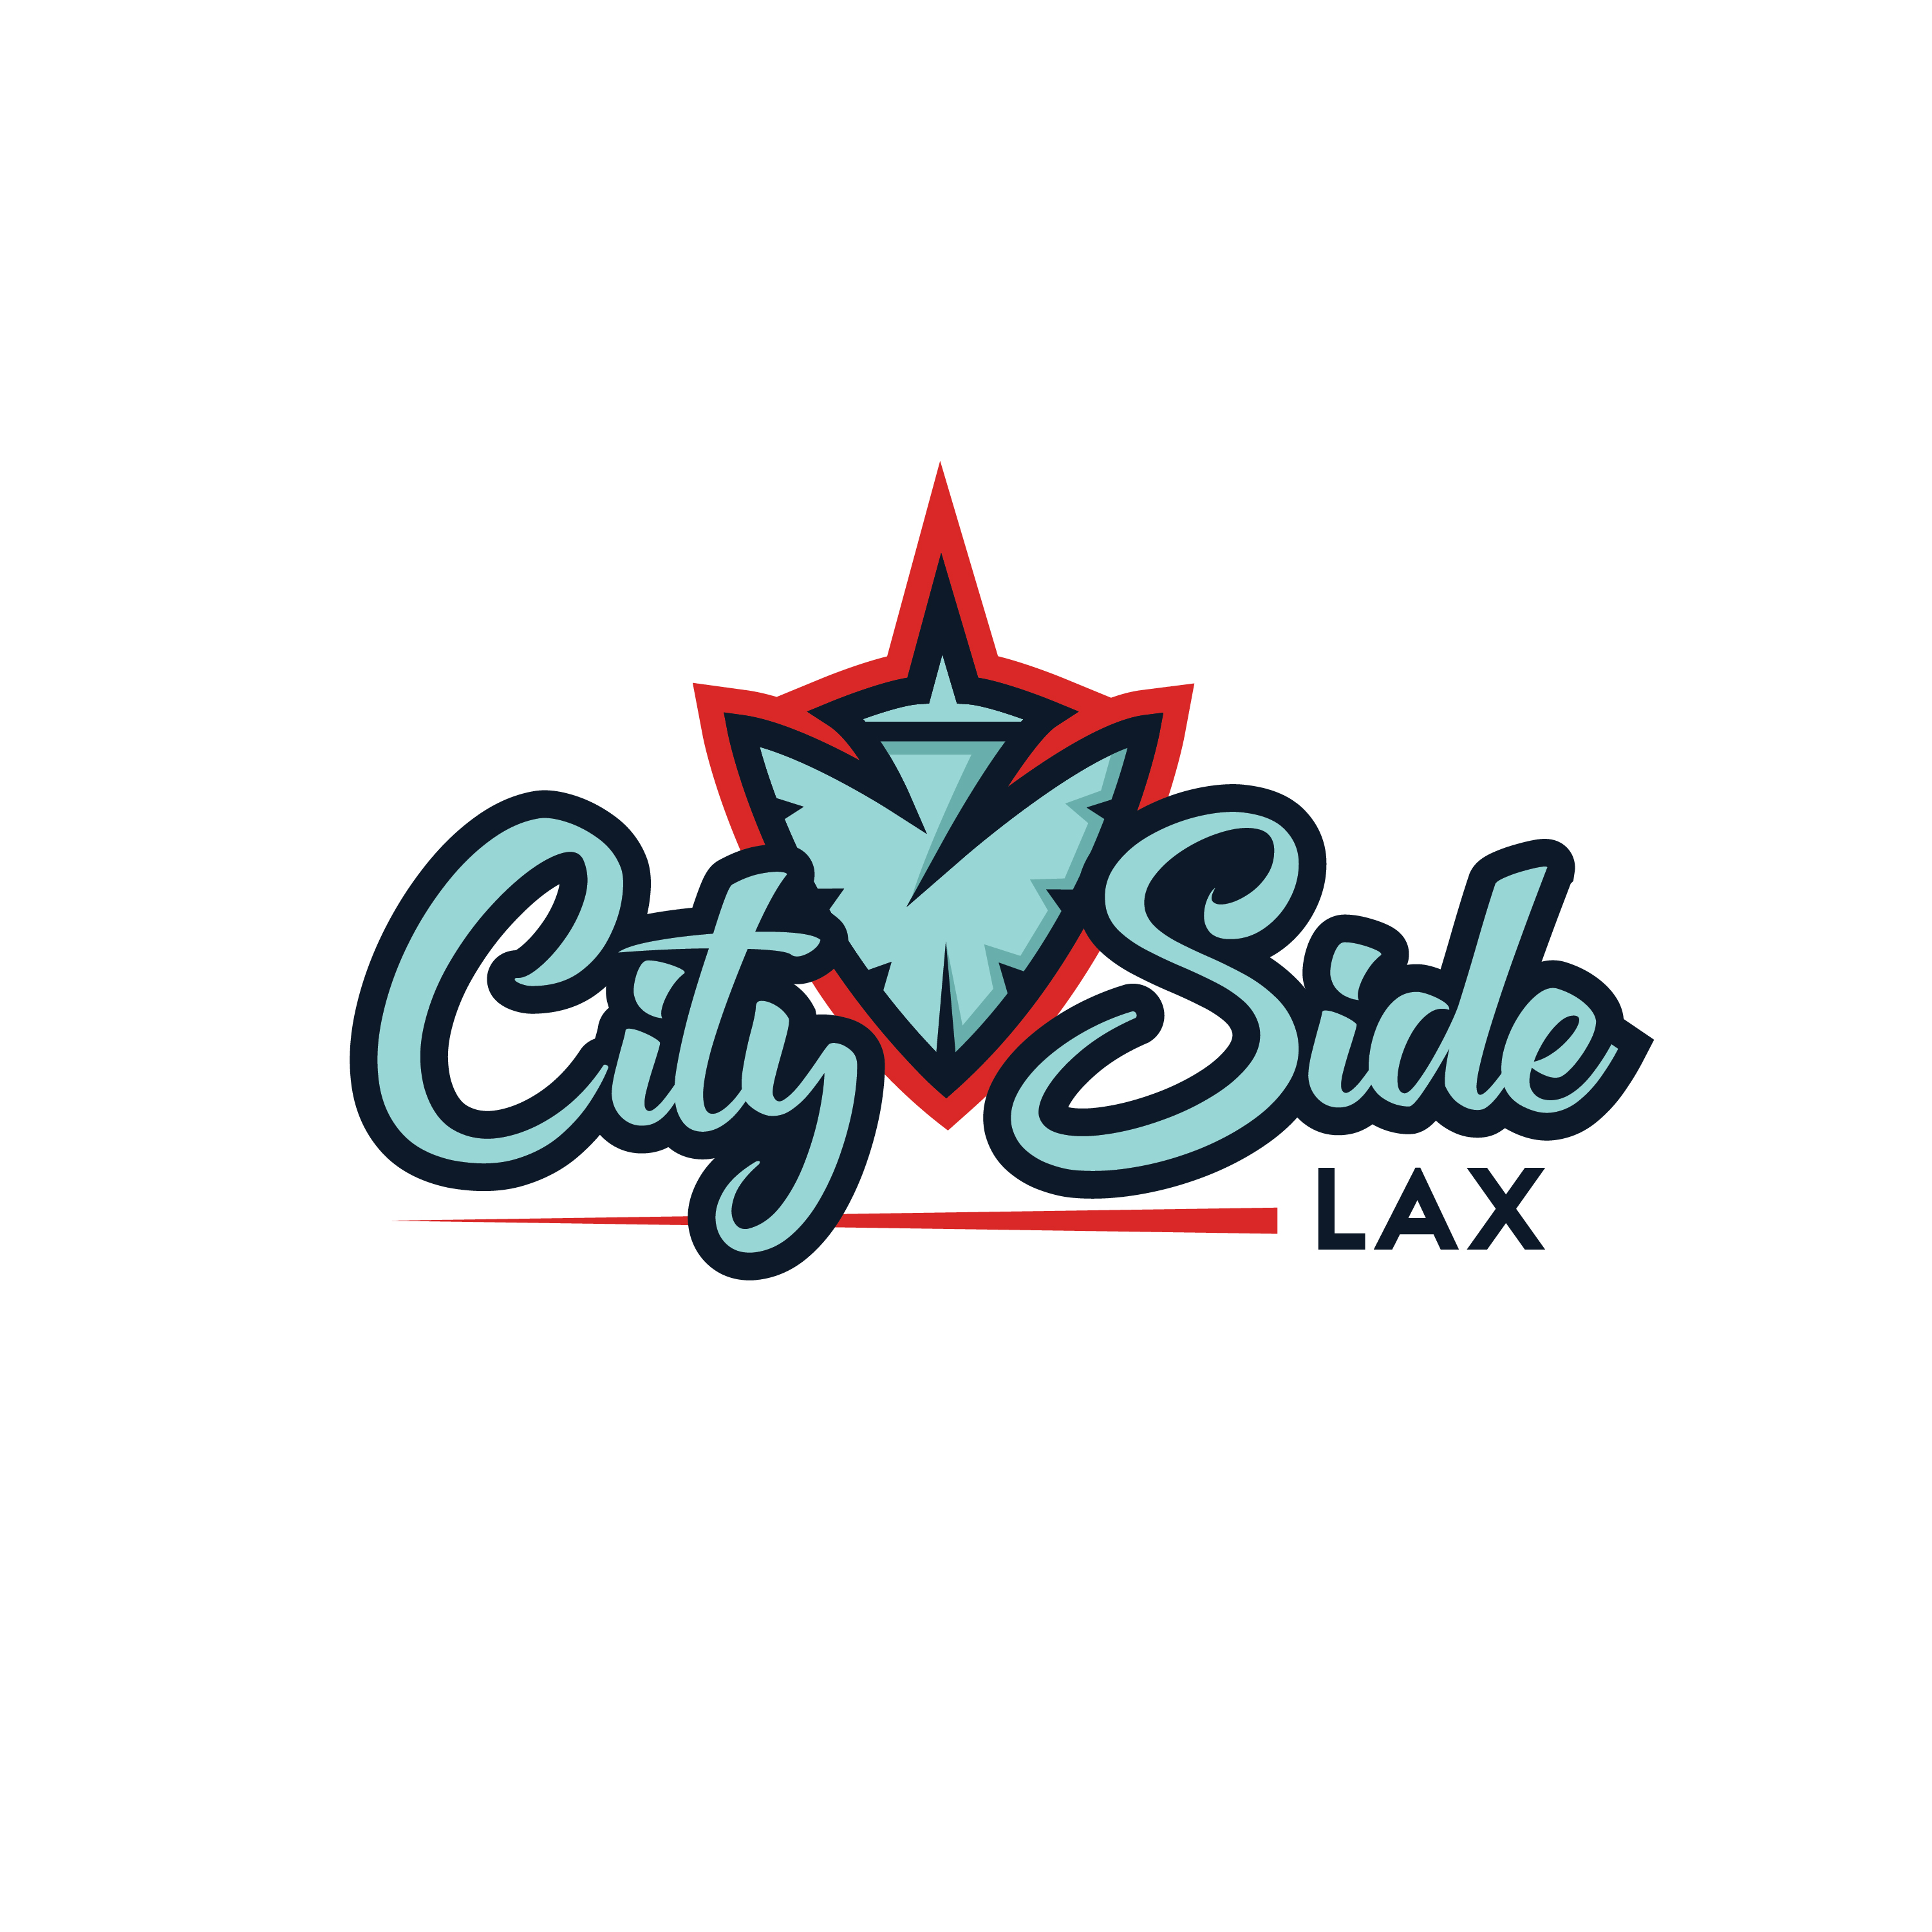 CitySide Lax